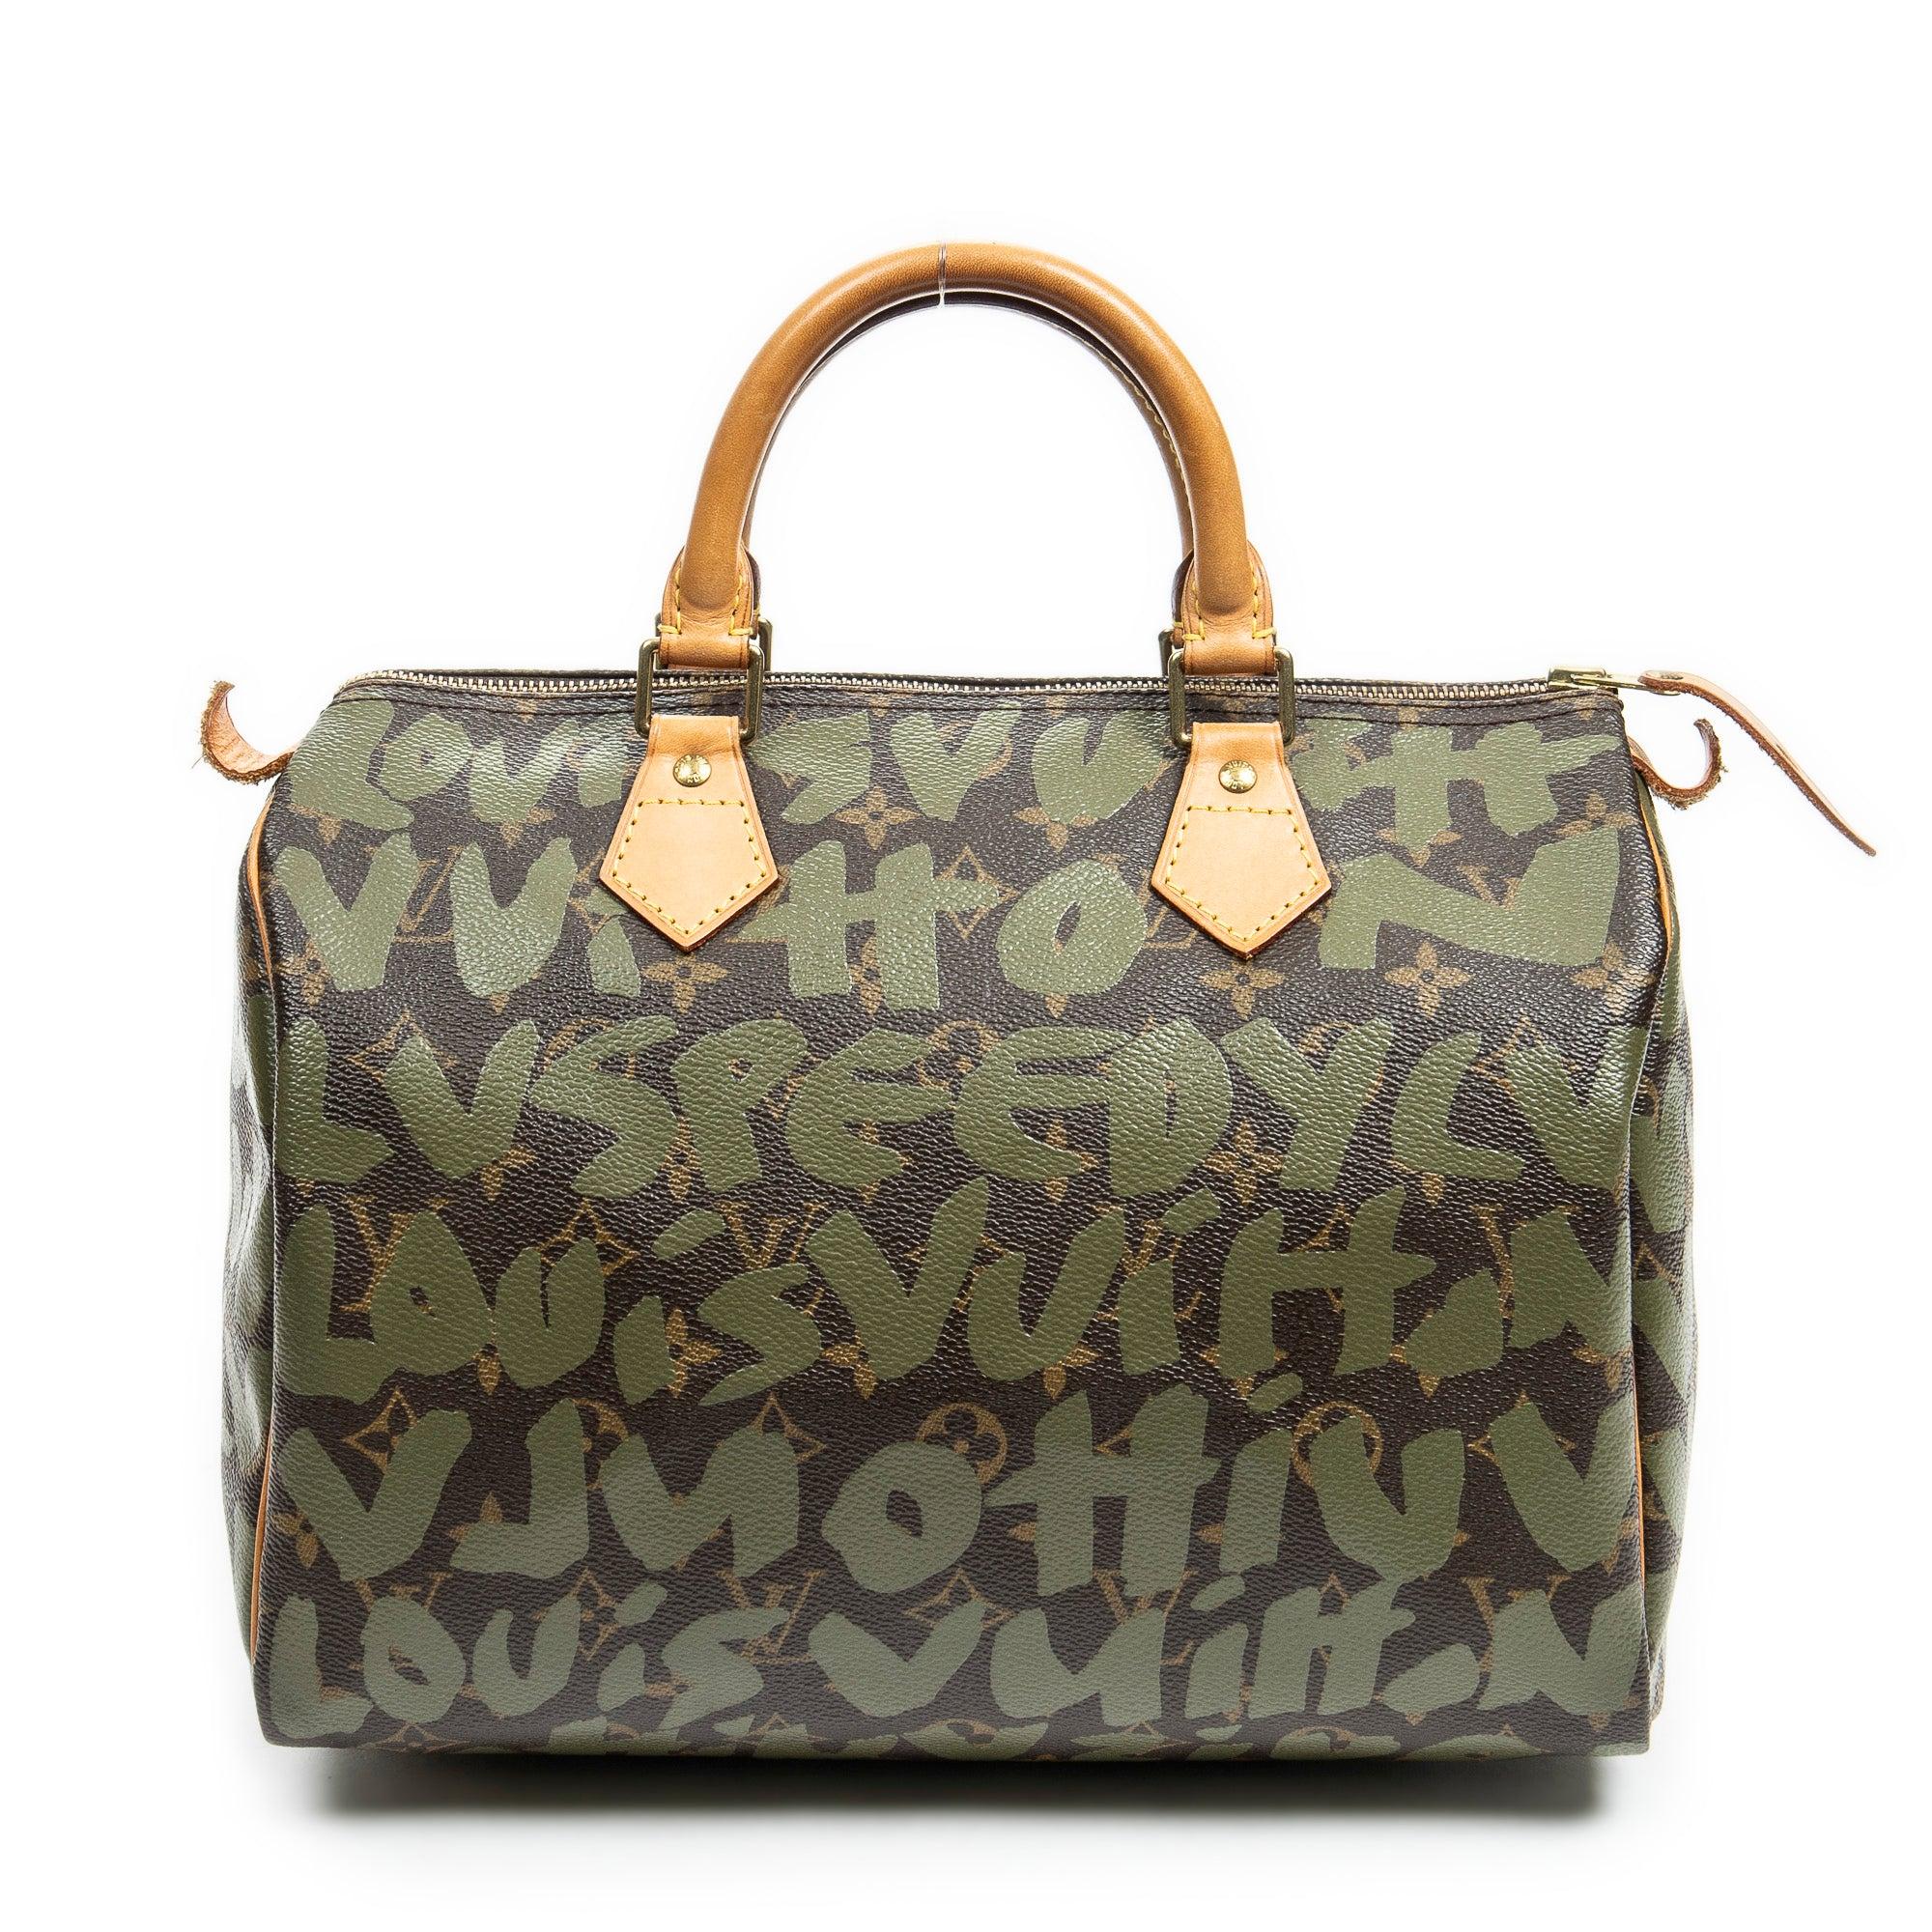 Louis Vuitton Stephen Sprouse Speedy Bag